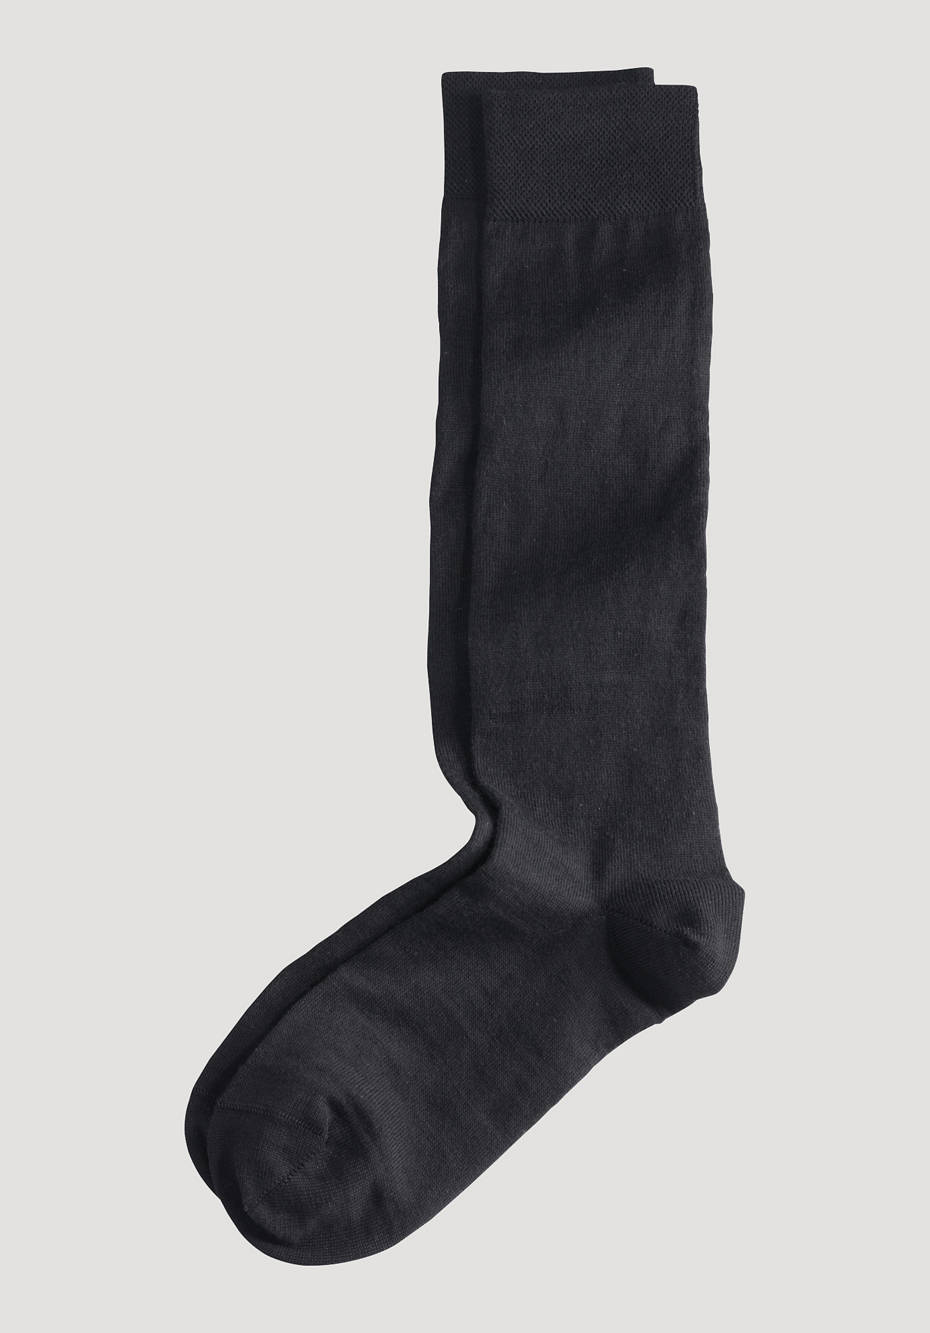 Knee socks made of organic new wool with organic cotton